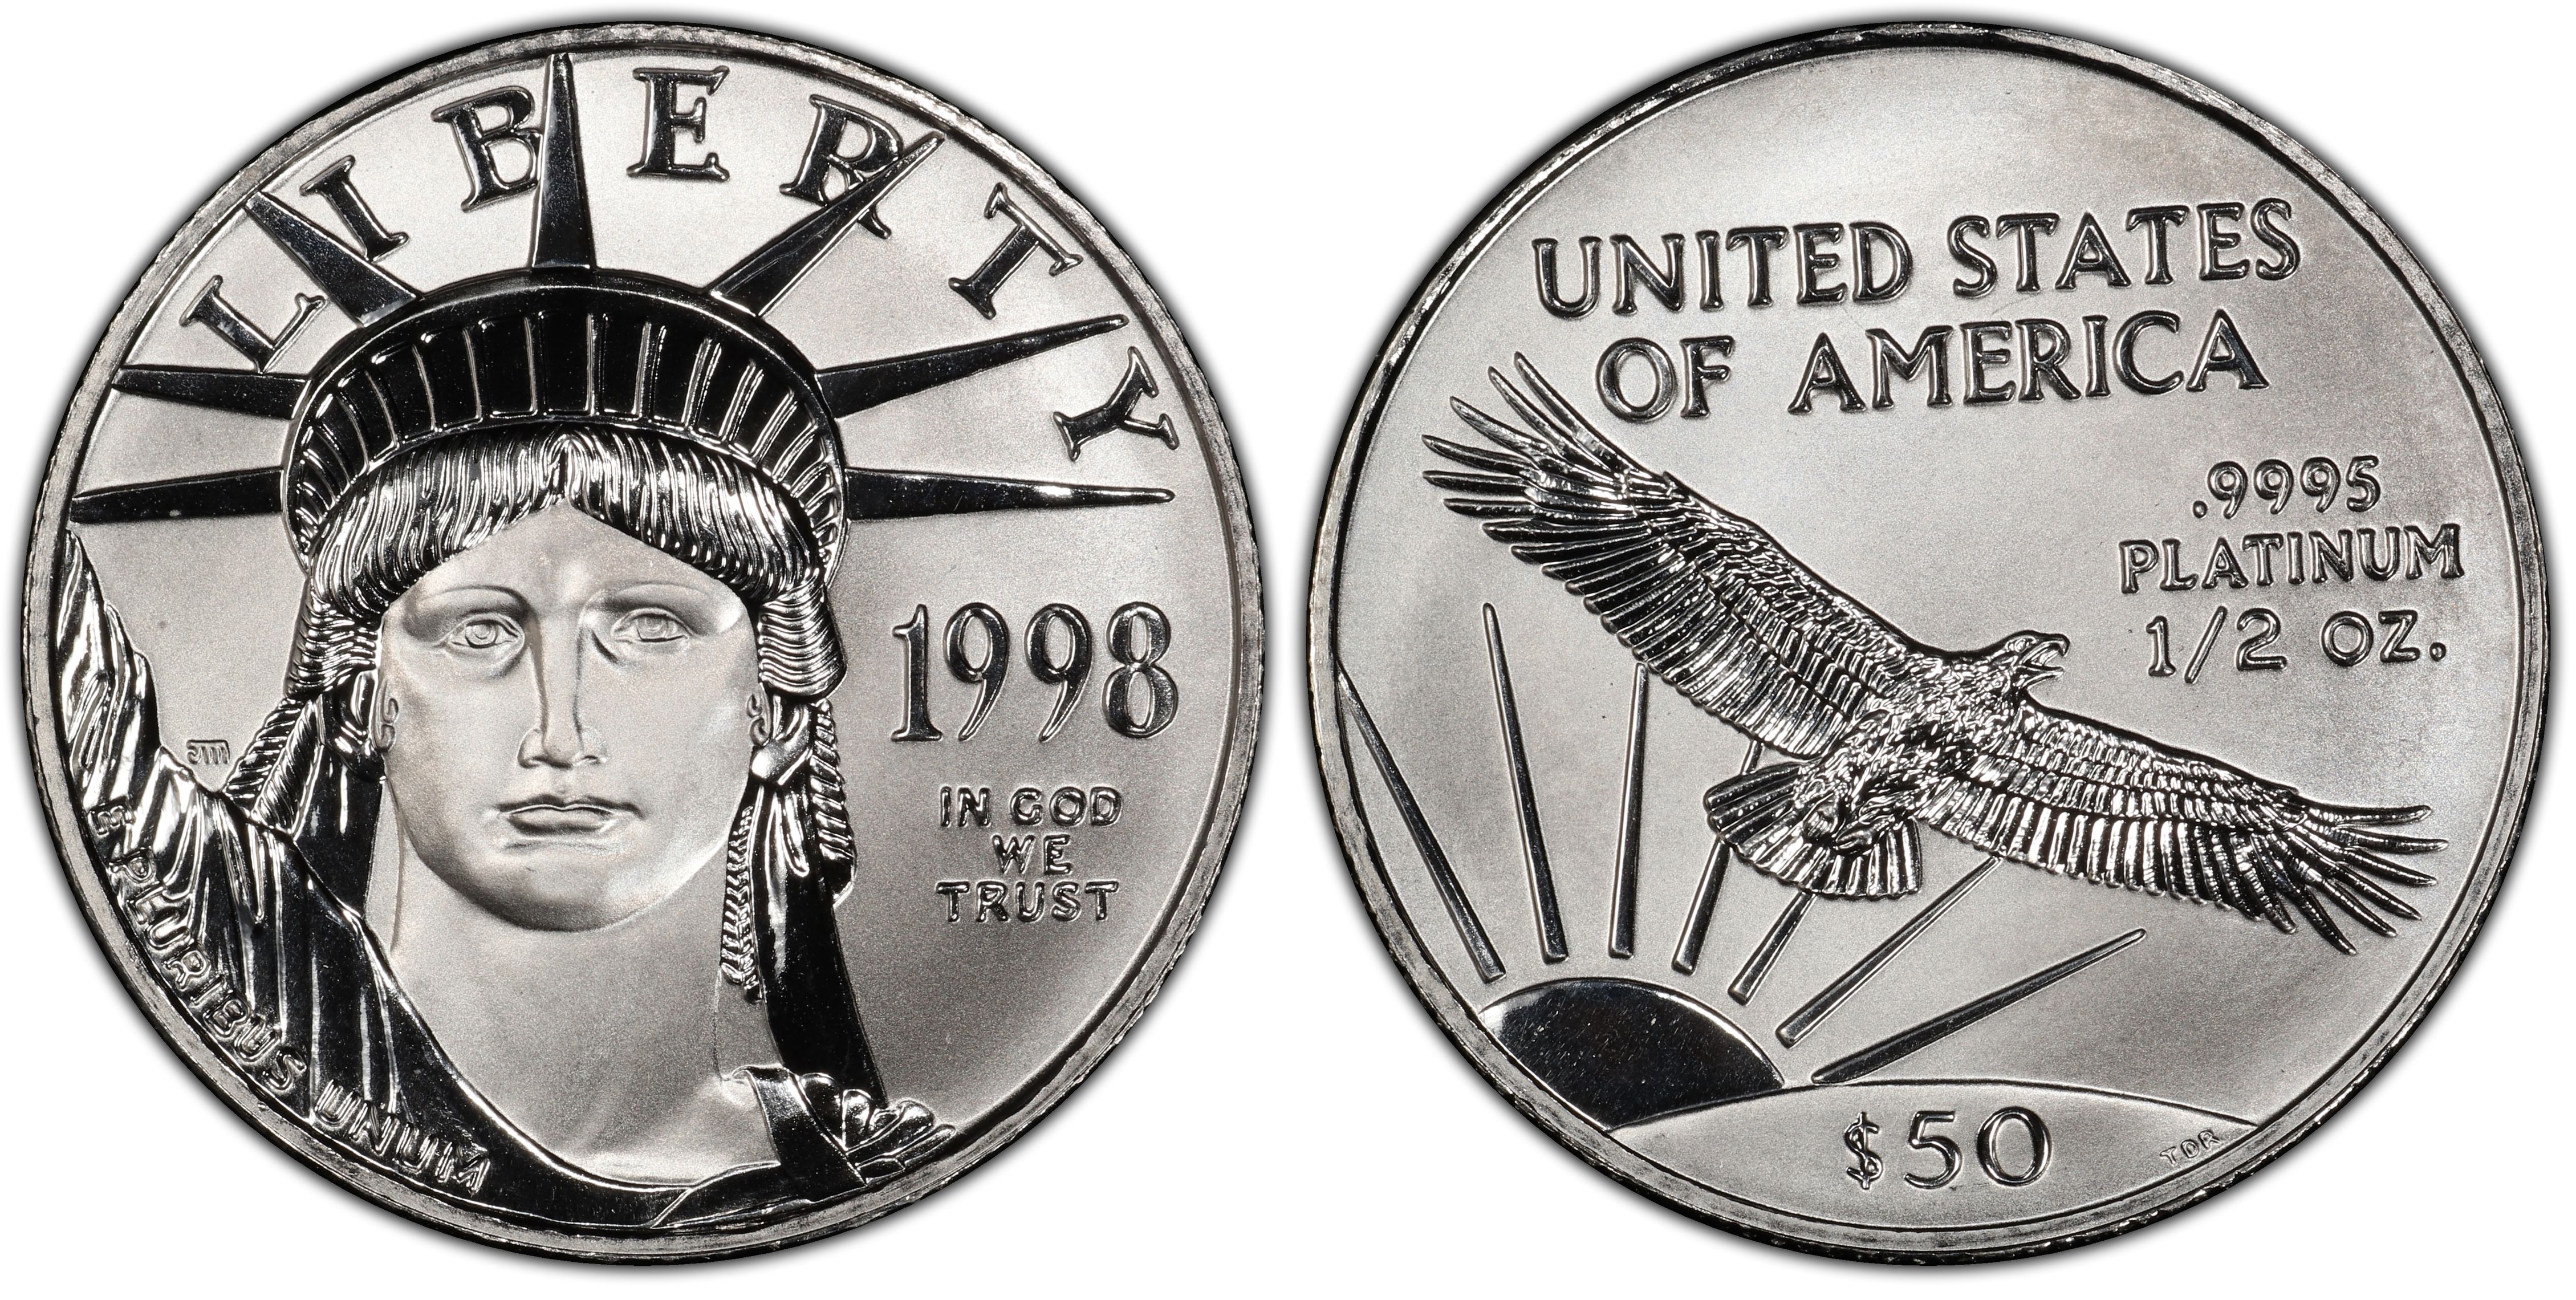 1998 $50 Statue of Liberty (Regular Strike) Platinum Eagles - PCGS